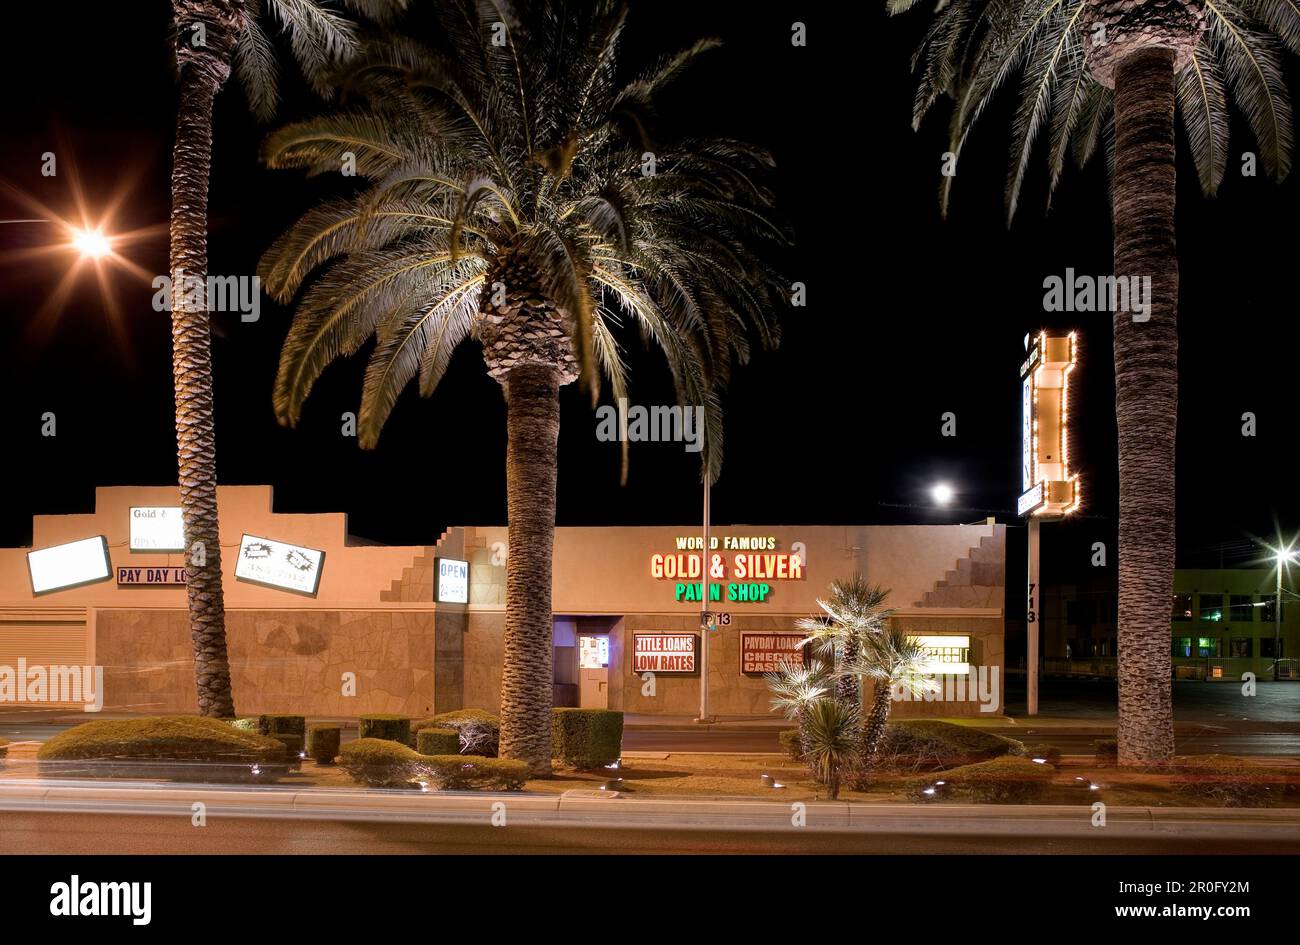 Pawn Shop on Las Vegas Boulevard, The Strip. Downtown Las Vegas, Nevada, USA Stock Photo